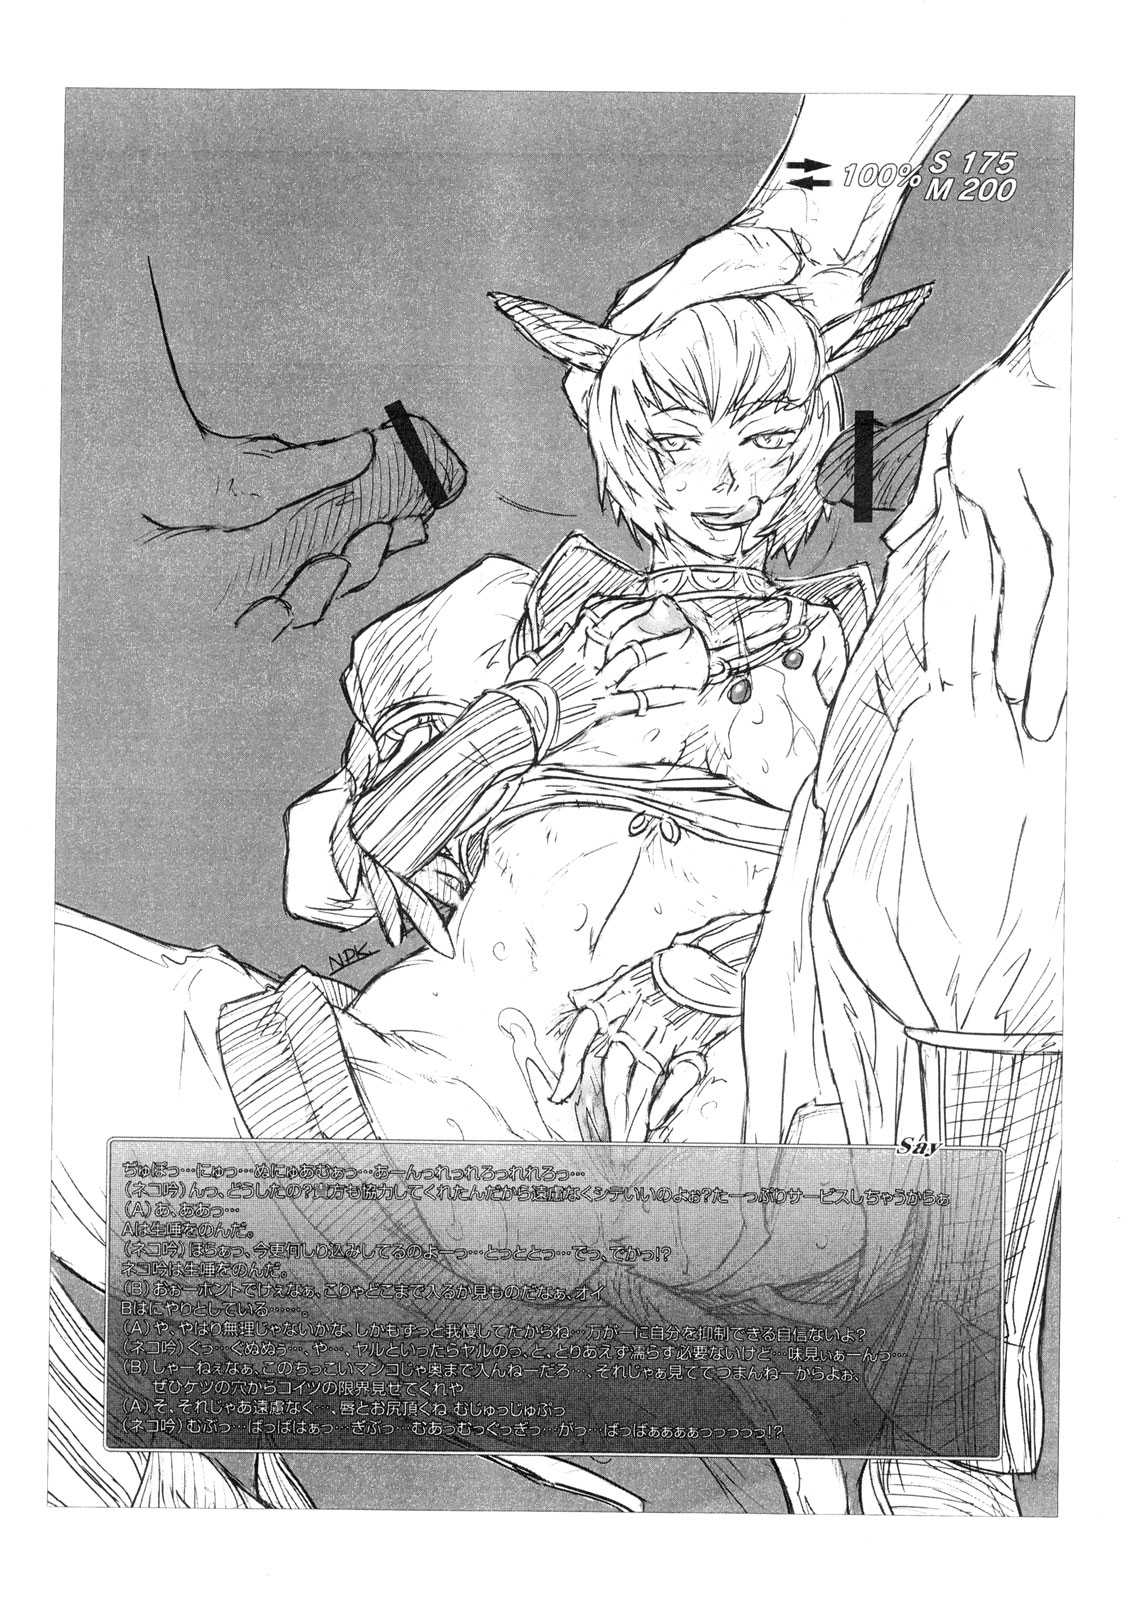 [NP Uirusu Jouryuujo] Mithman Report 2005 (Final Fantasy XI) 